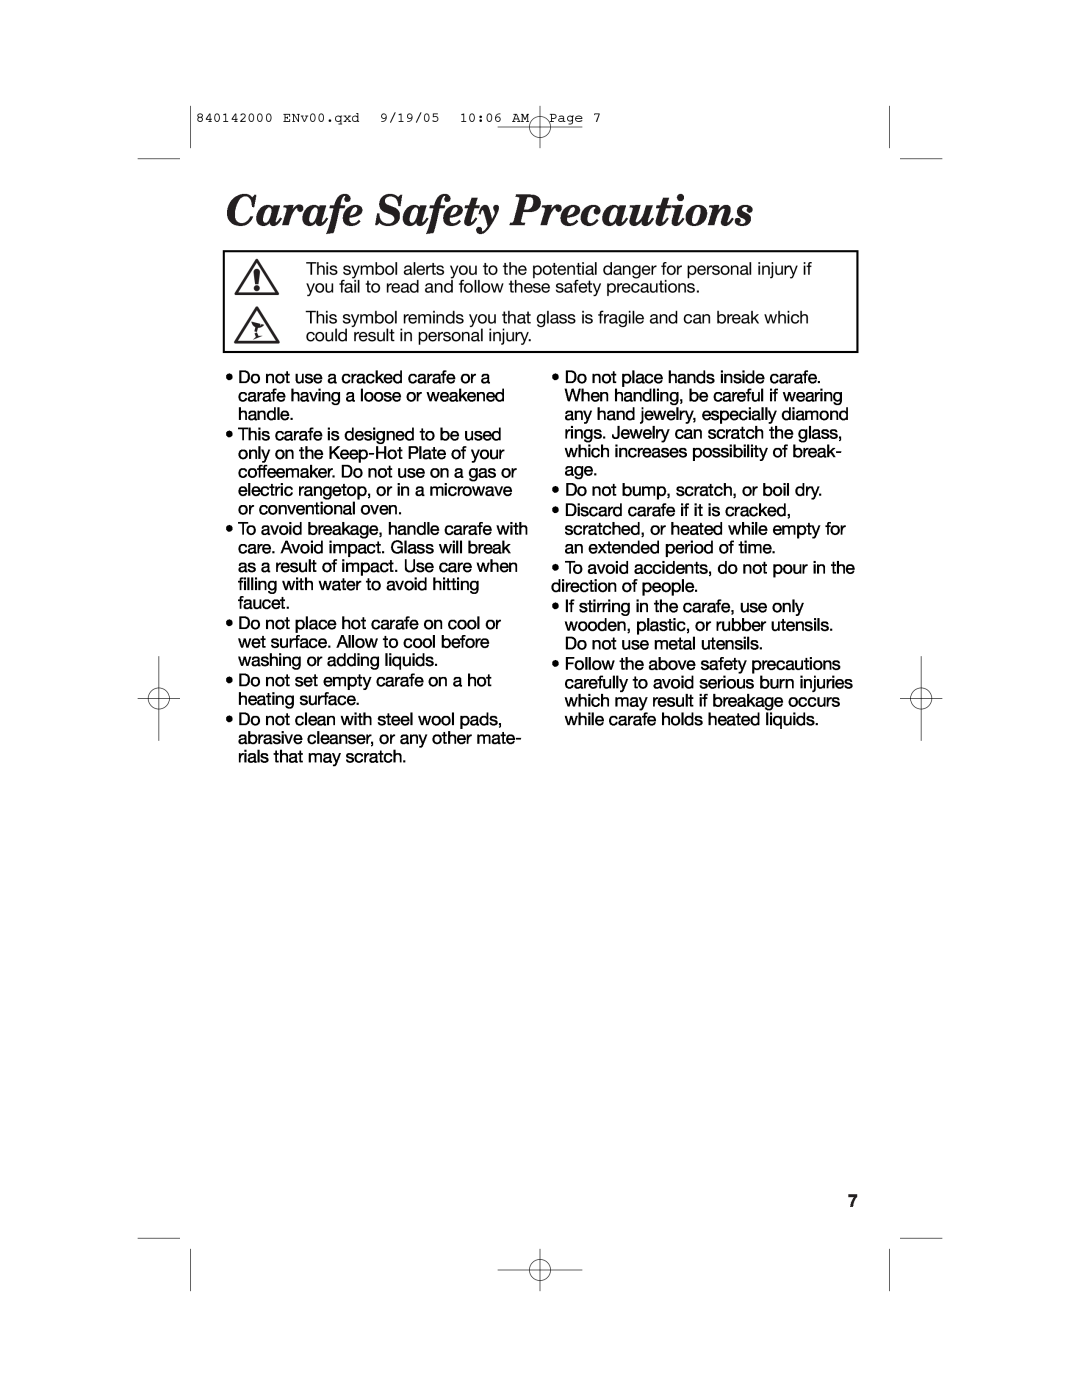 Hamilton Beach 840142000 manual Carafe Safety Precautions 